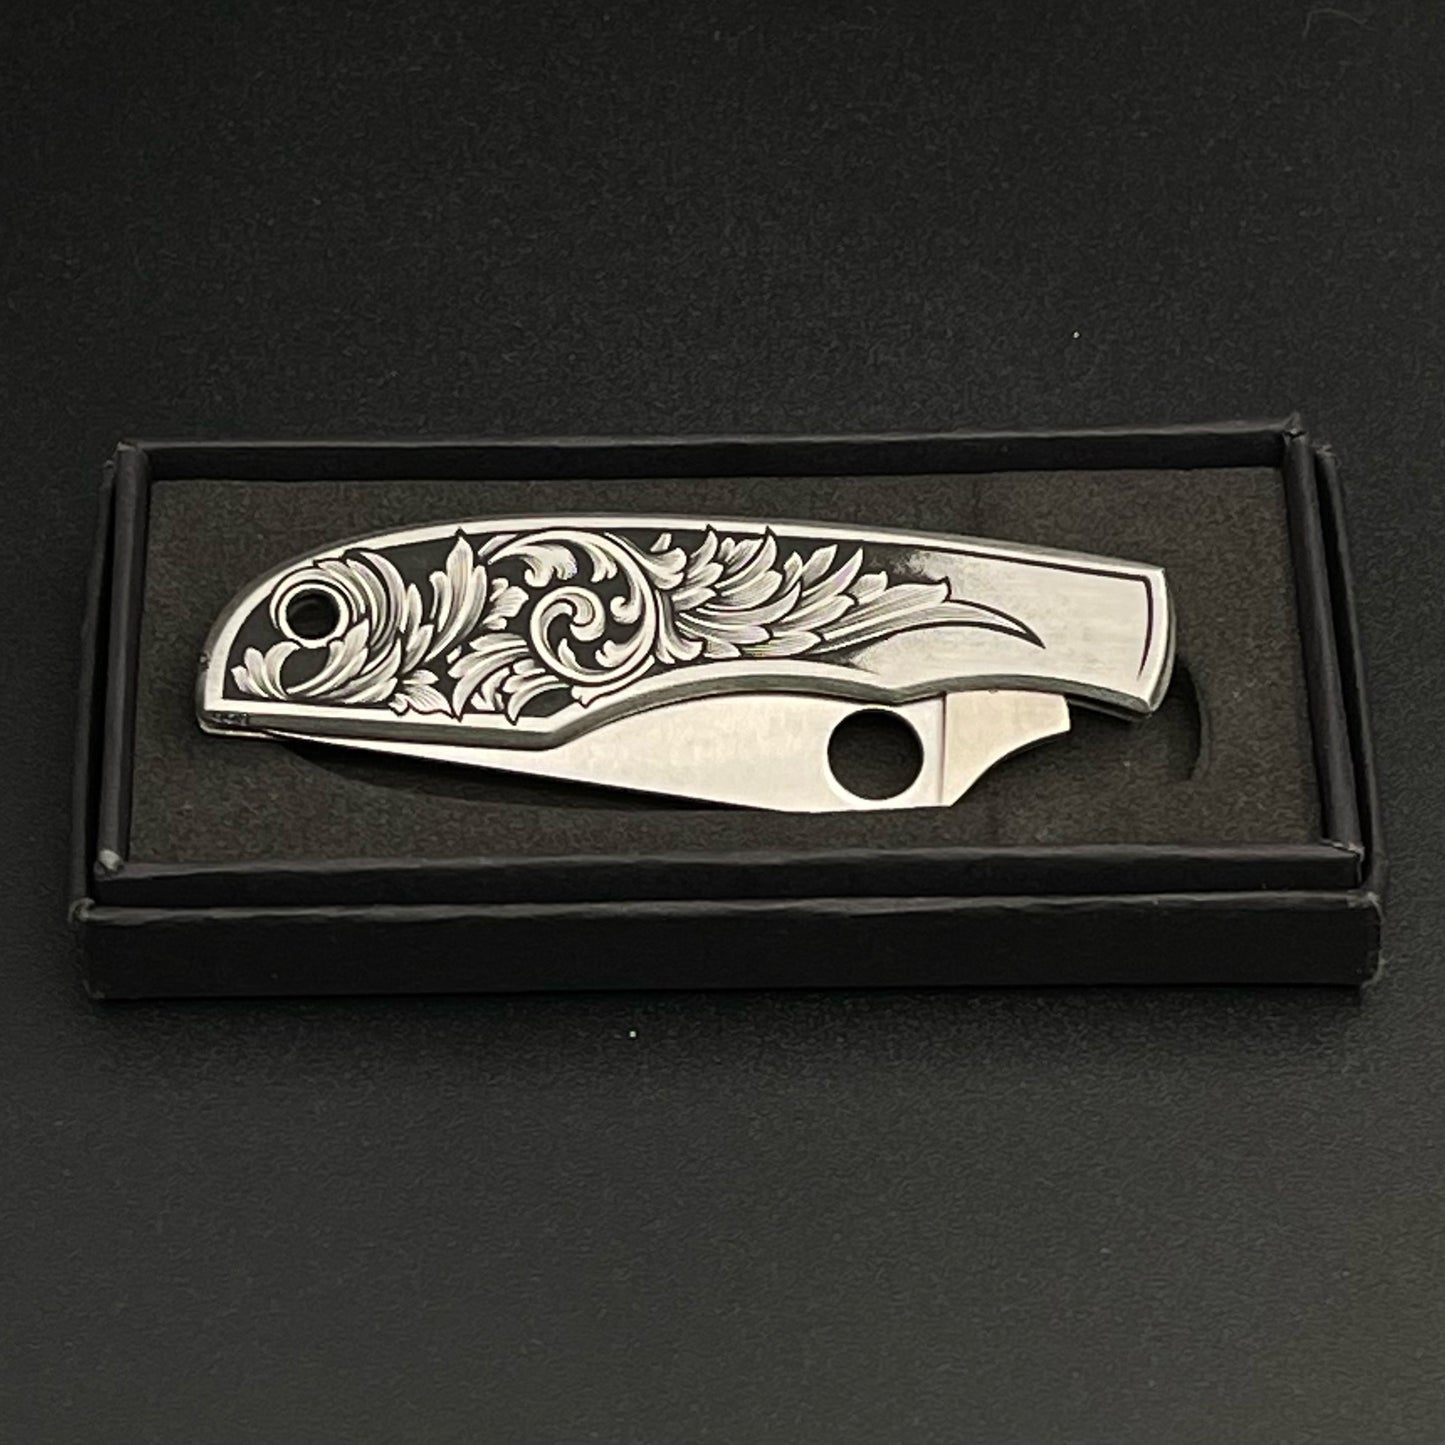 Elaborate hand-engraved Spyderco Pocket Knife - Grasshopper size